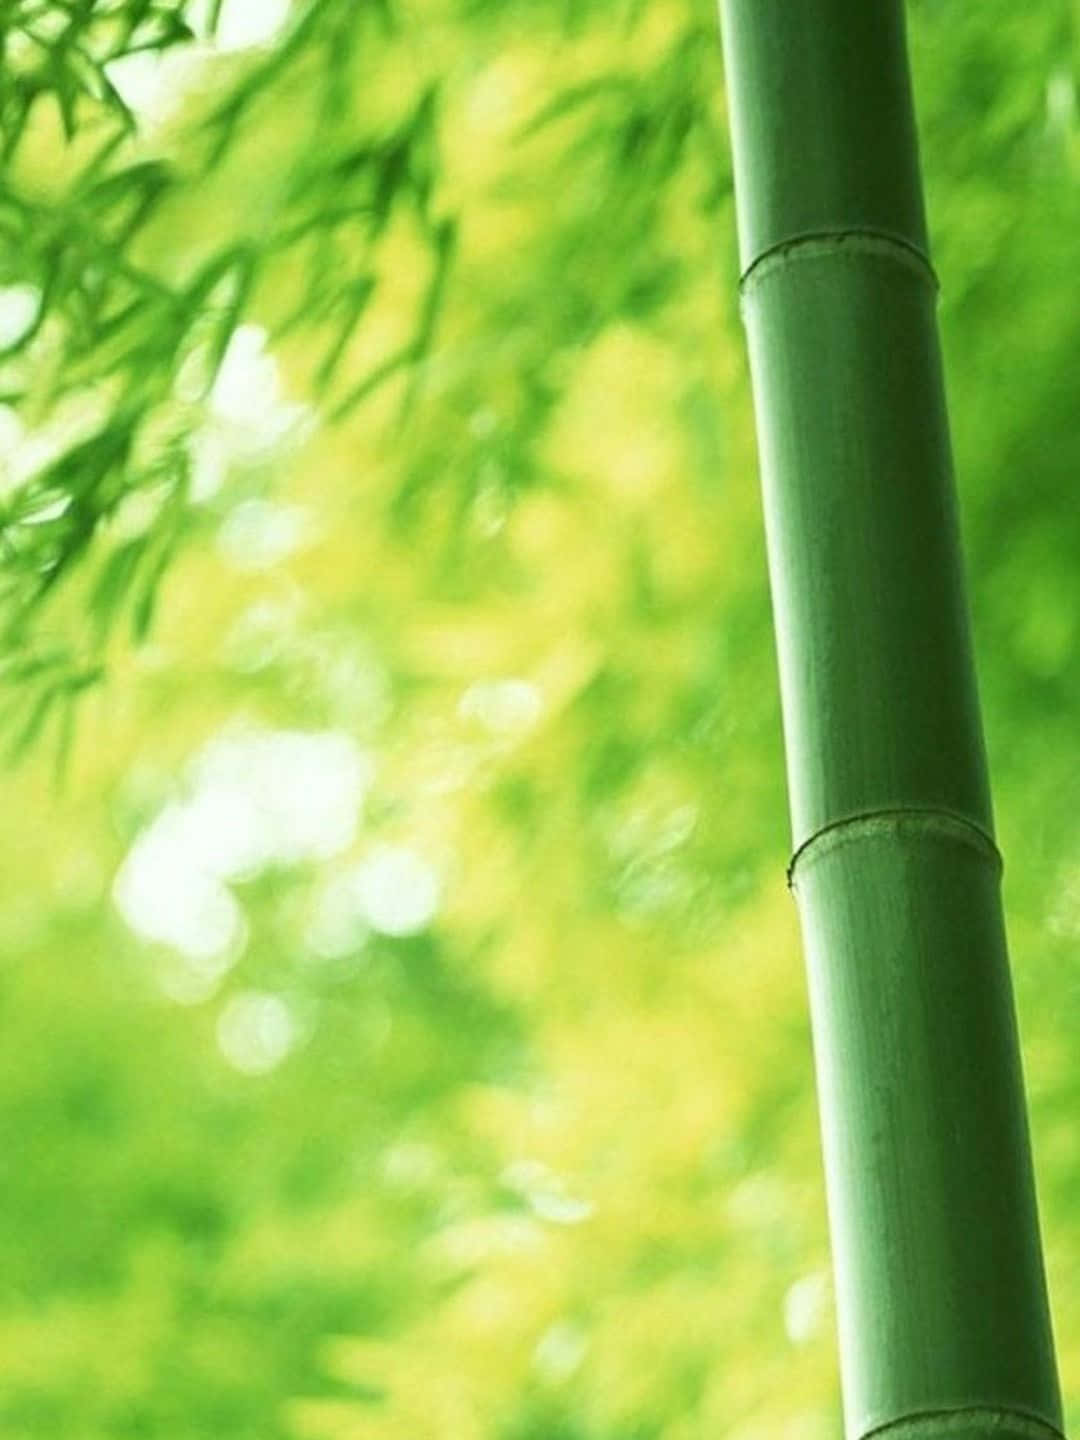 Fondode Pantalla De Bambú Con Árbol En 1440p Y Un Fondo Desenfocado.